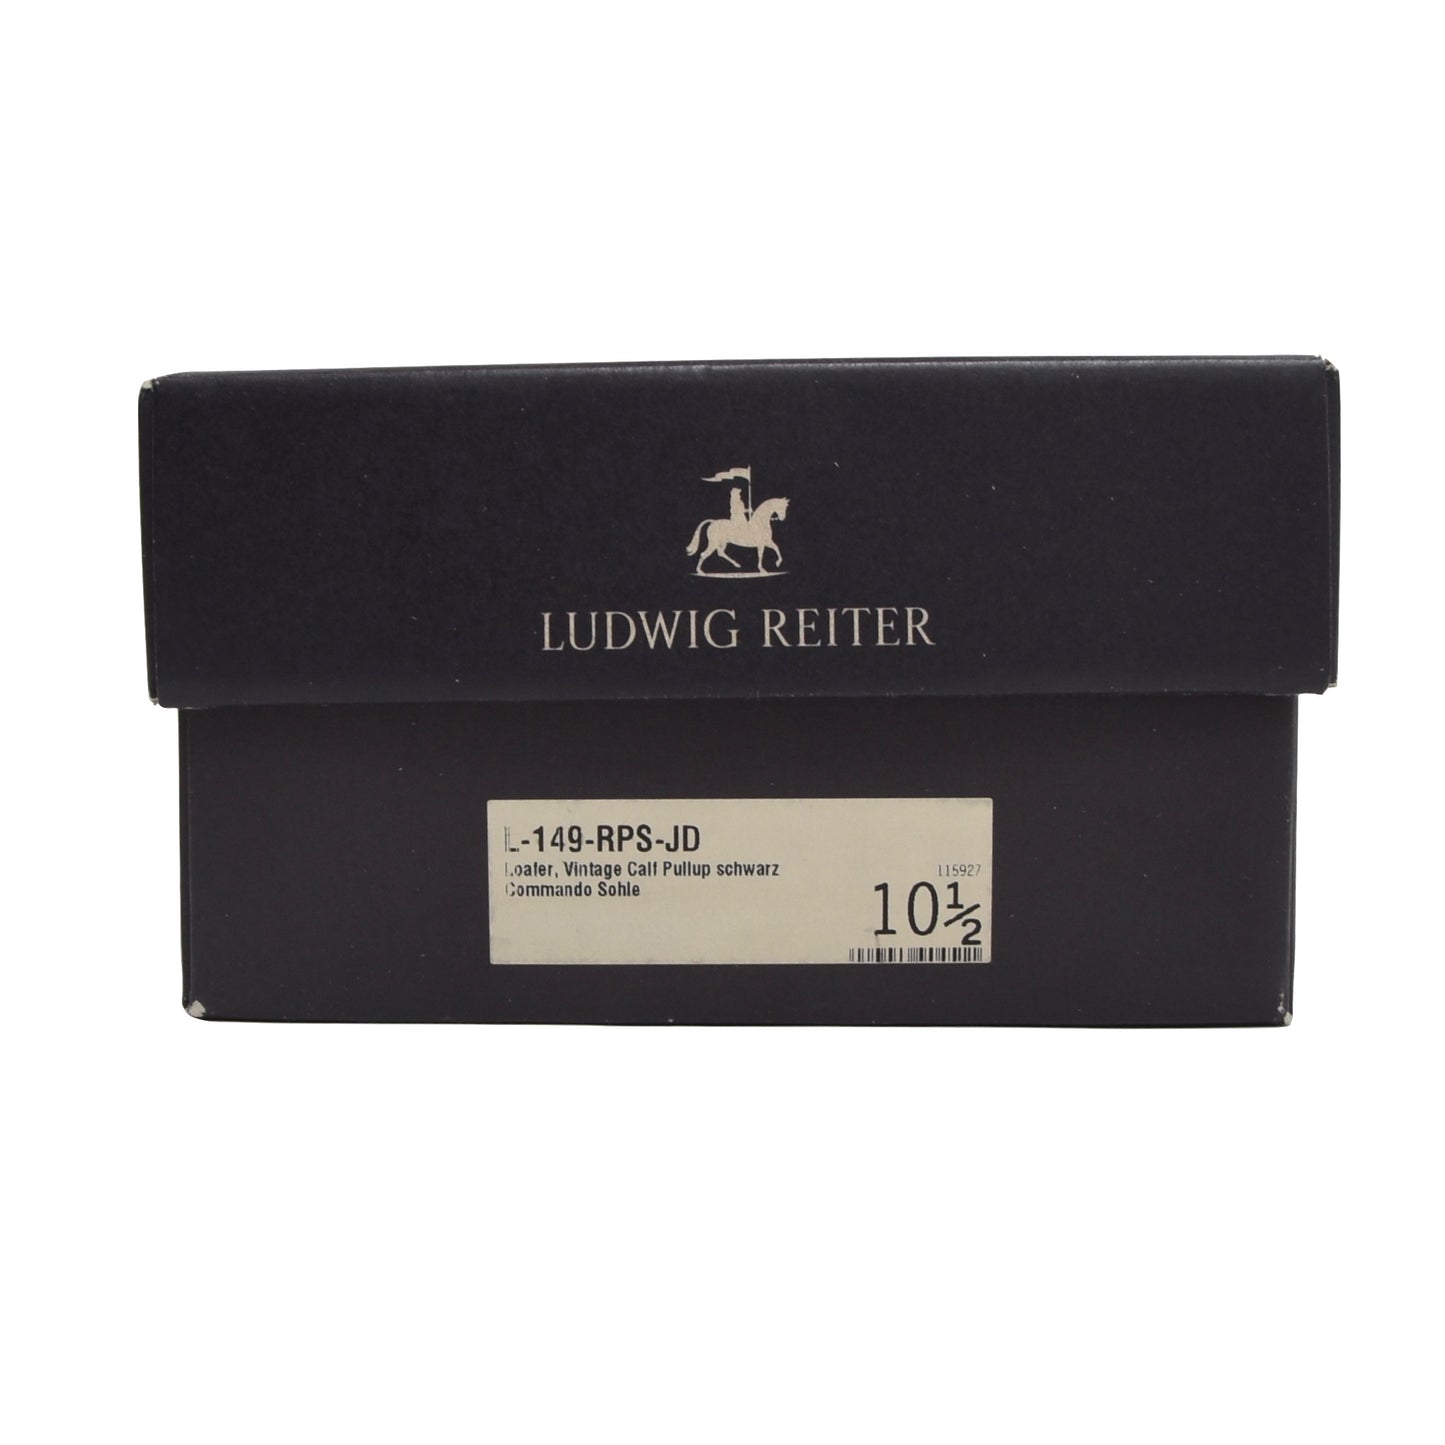 NEU Ludwig Reiter Leisure Class Loafer Gr. 10,5 - Schwarz